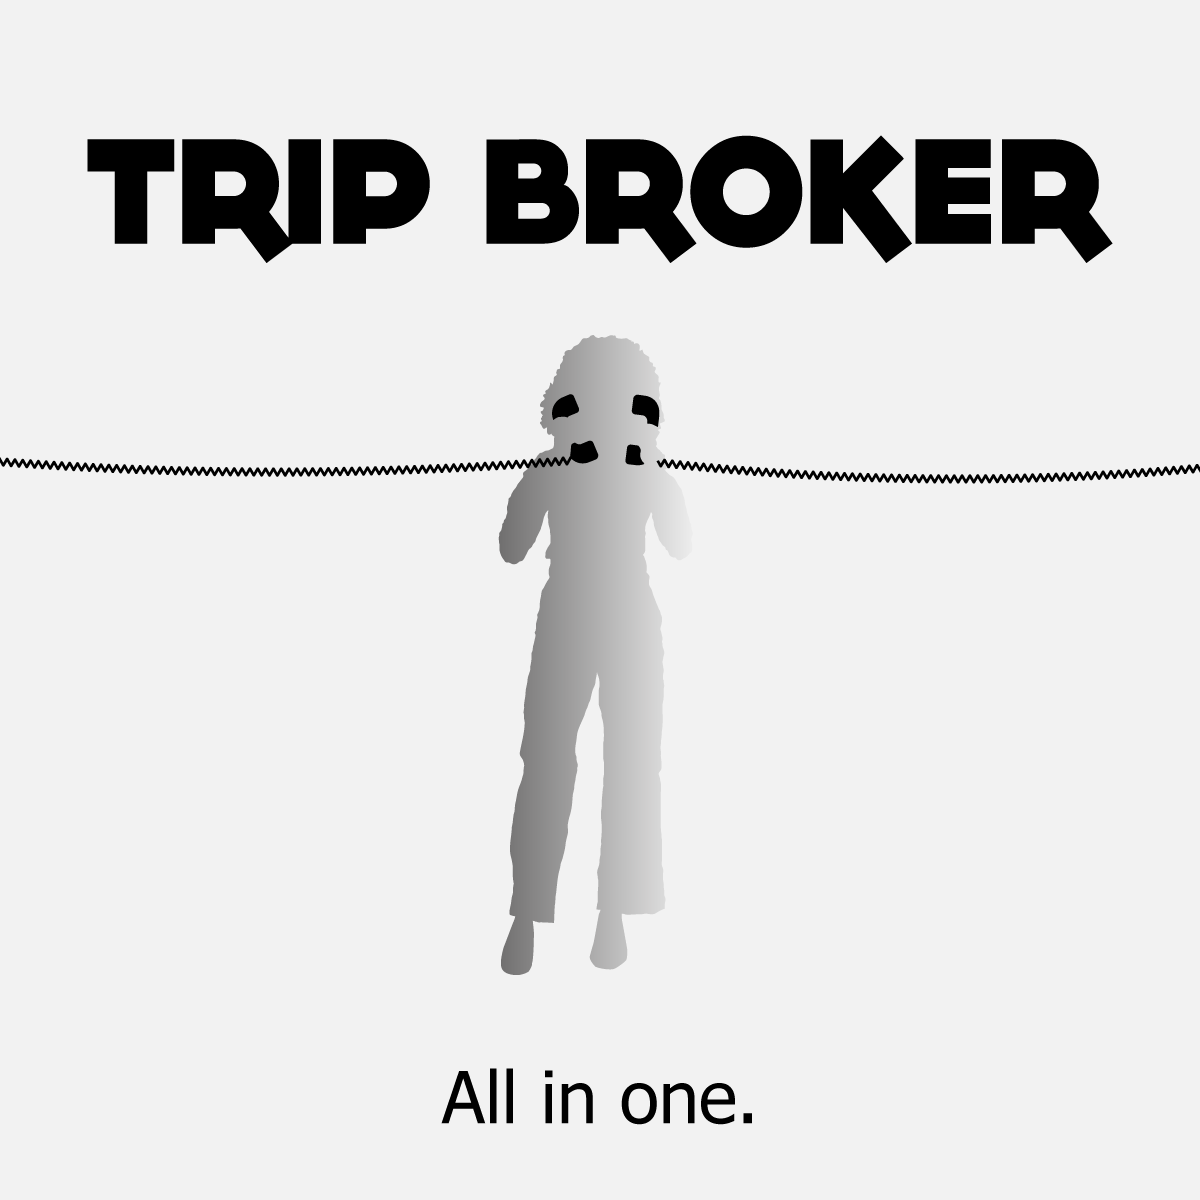 Trip broker